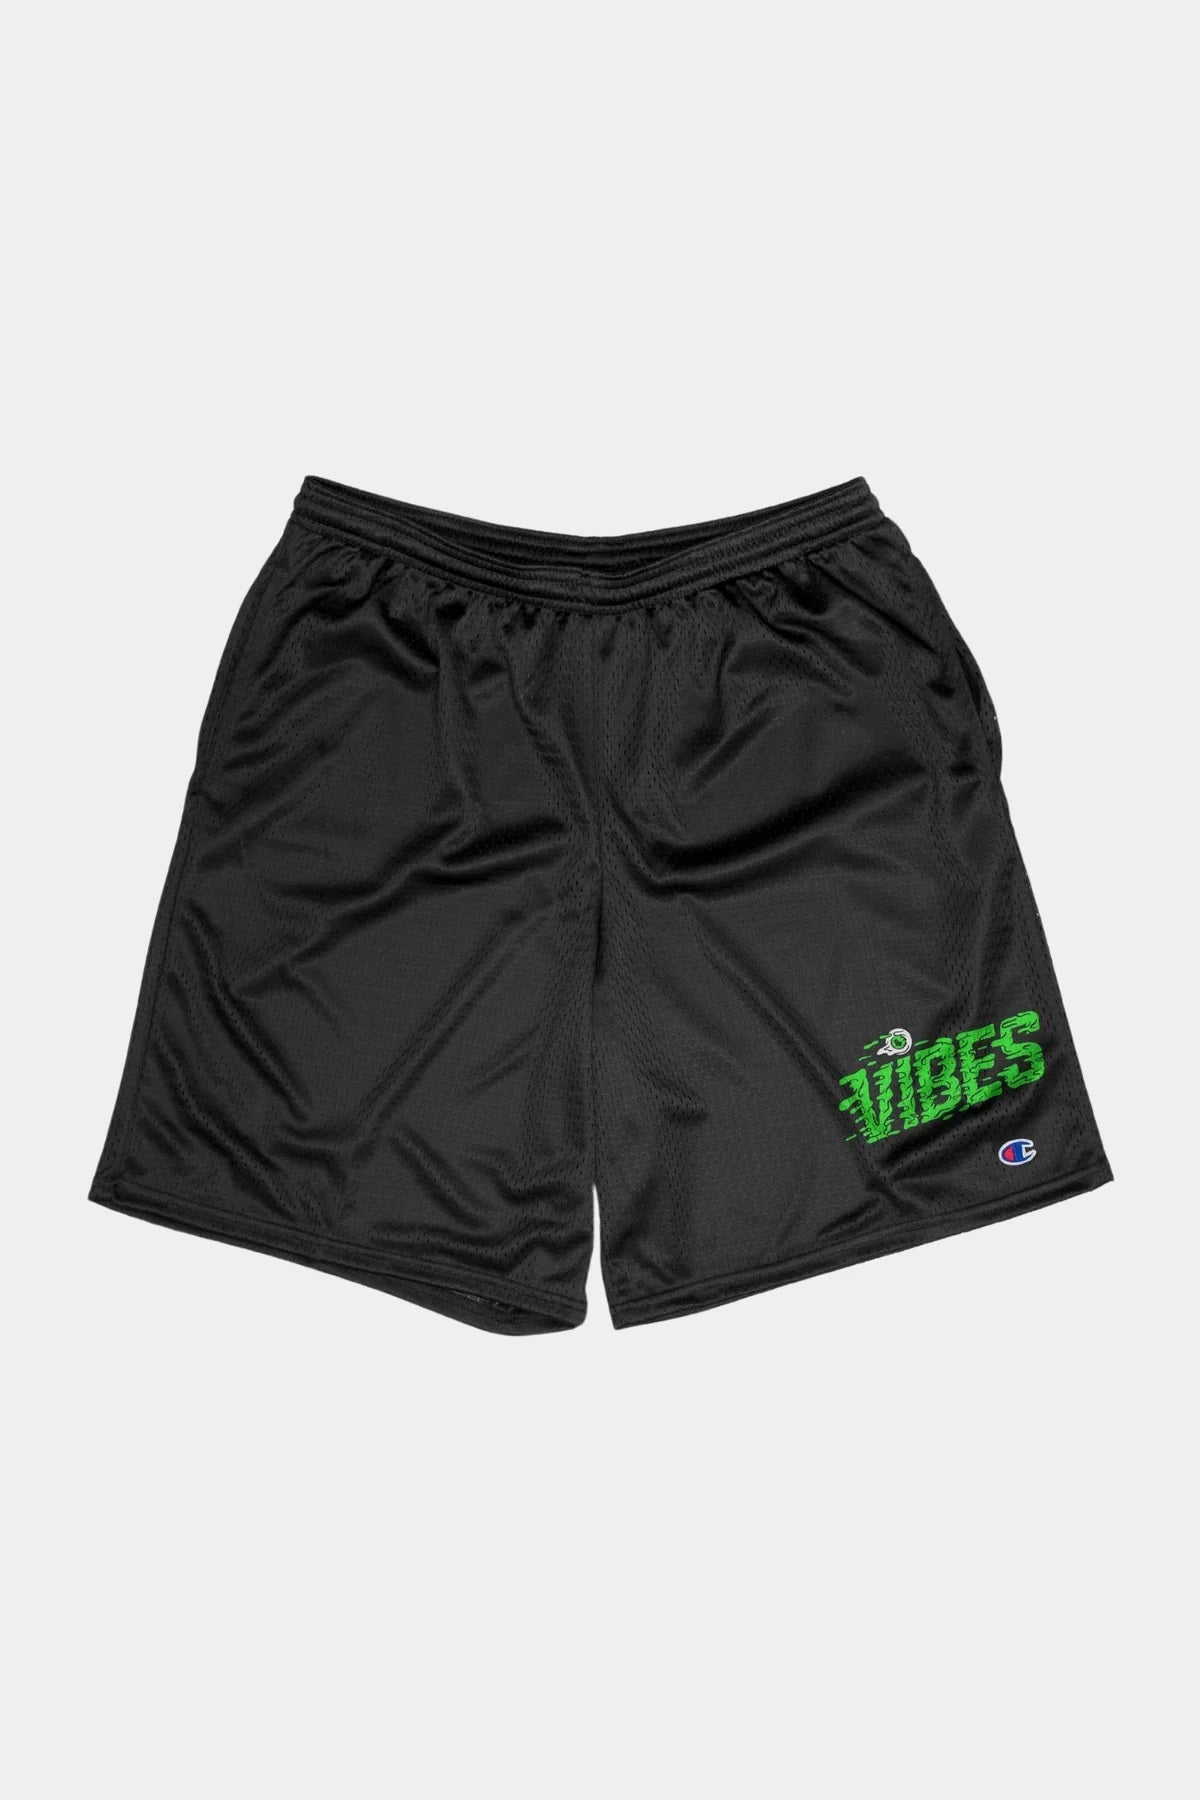 VIBES Black Slime Shorts Medium